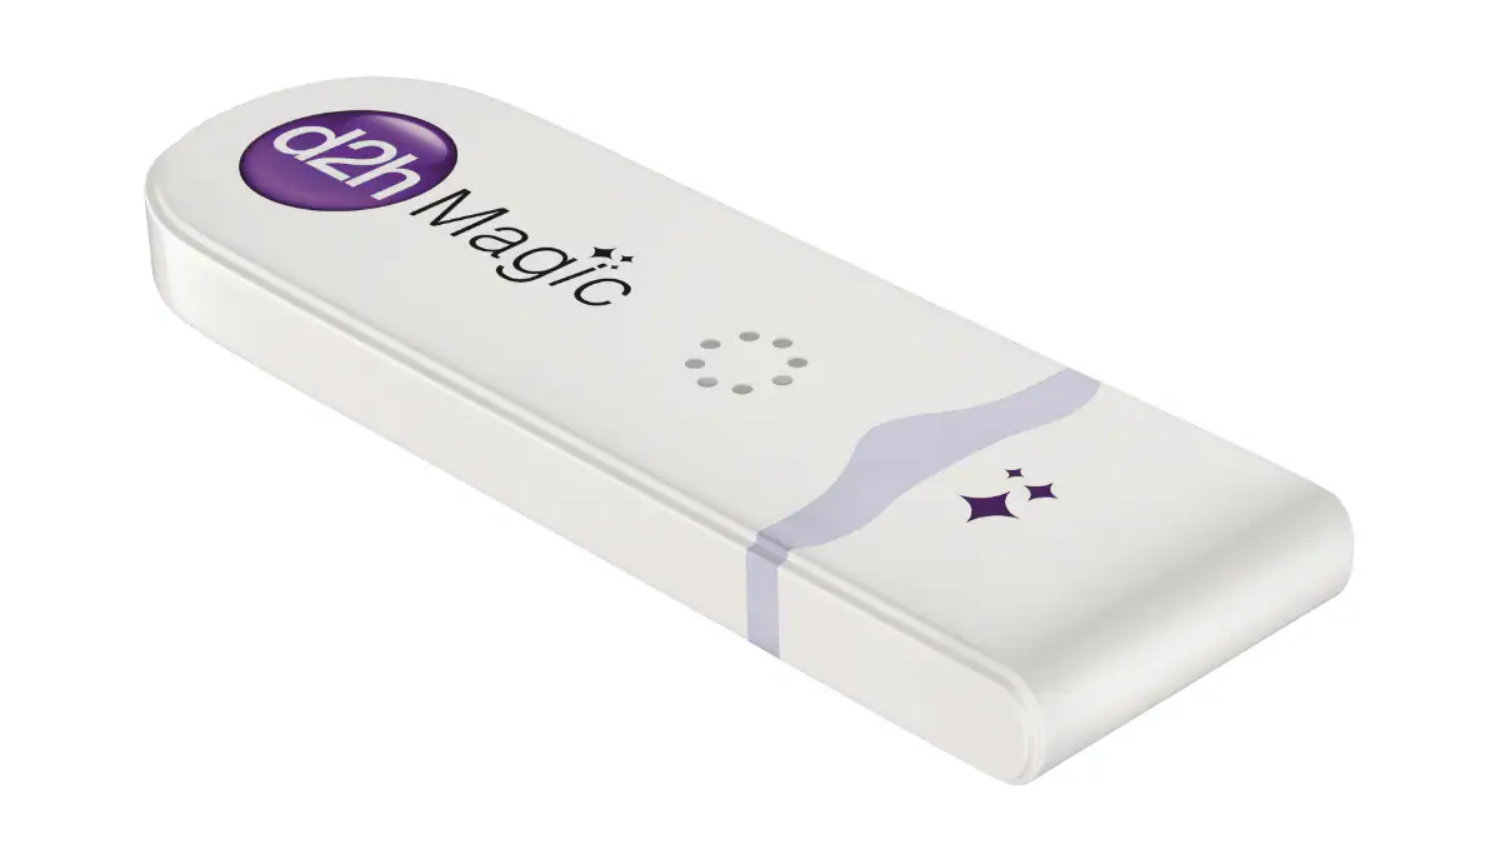 D2h Magic Stick Launched, Offers Online Entertainment Alongside Live TV